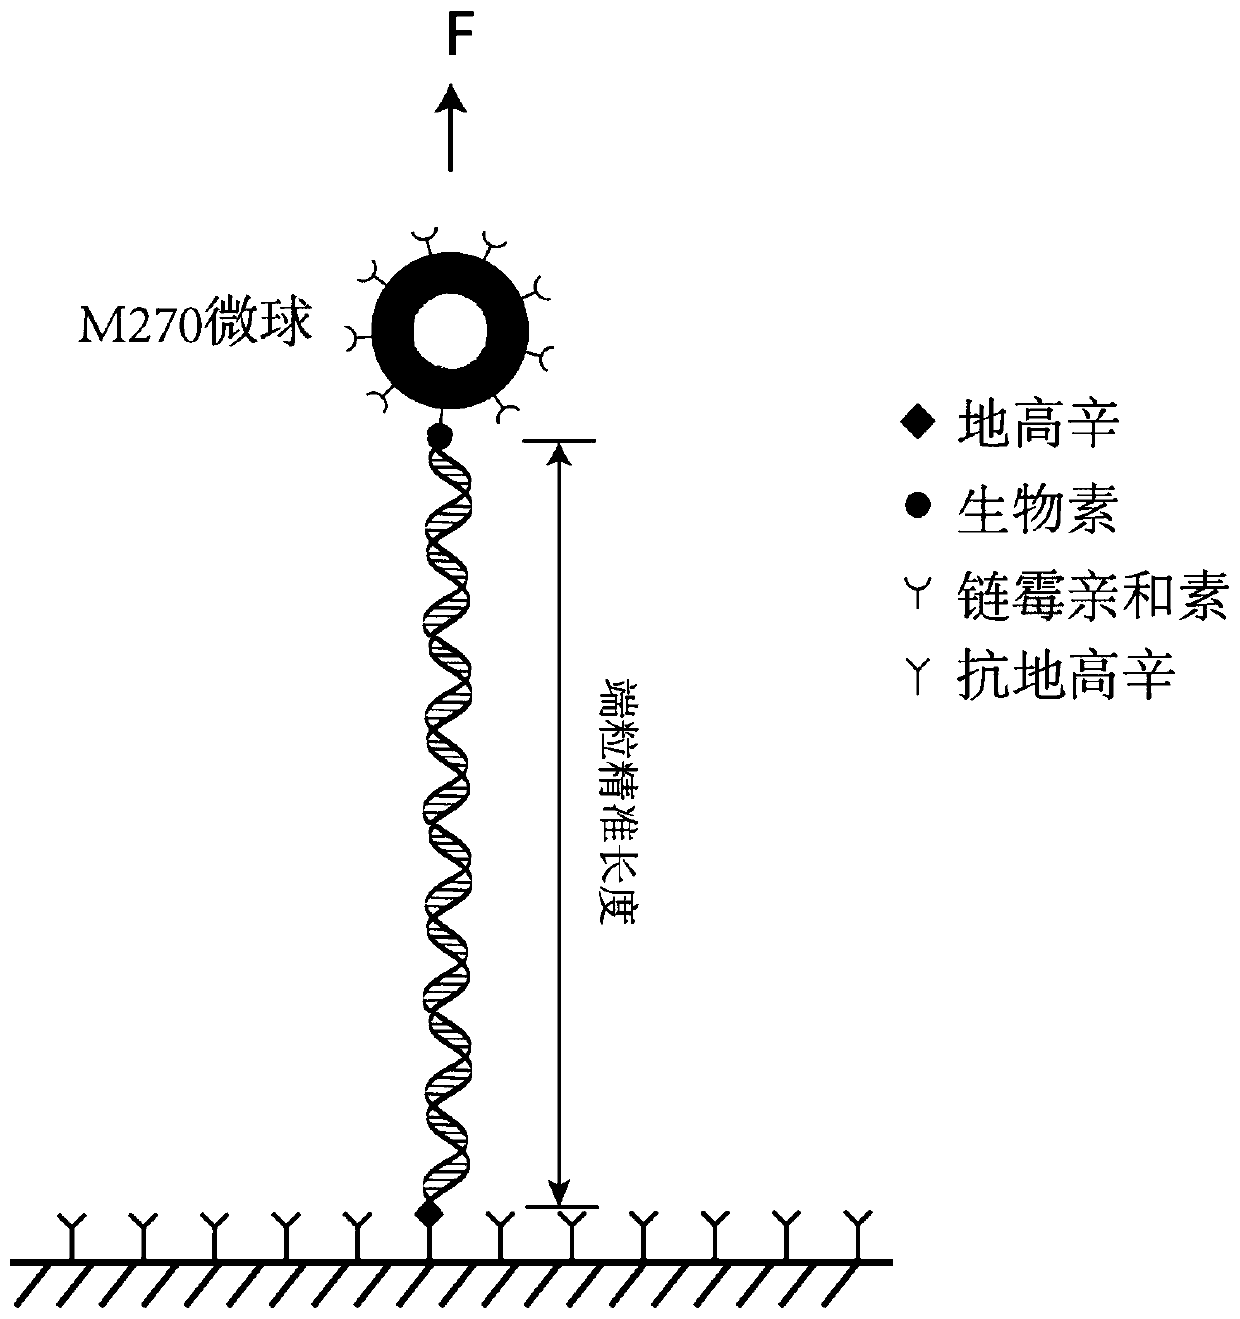 Monomolecular mechanics method for measuring accurate length of human telomere